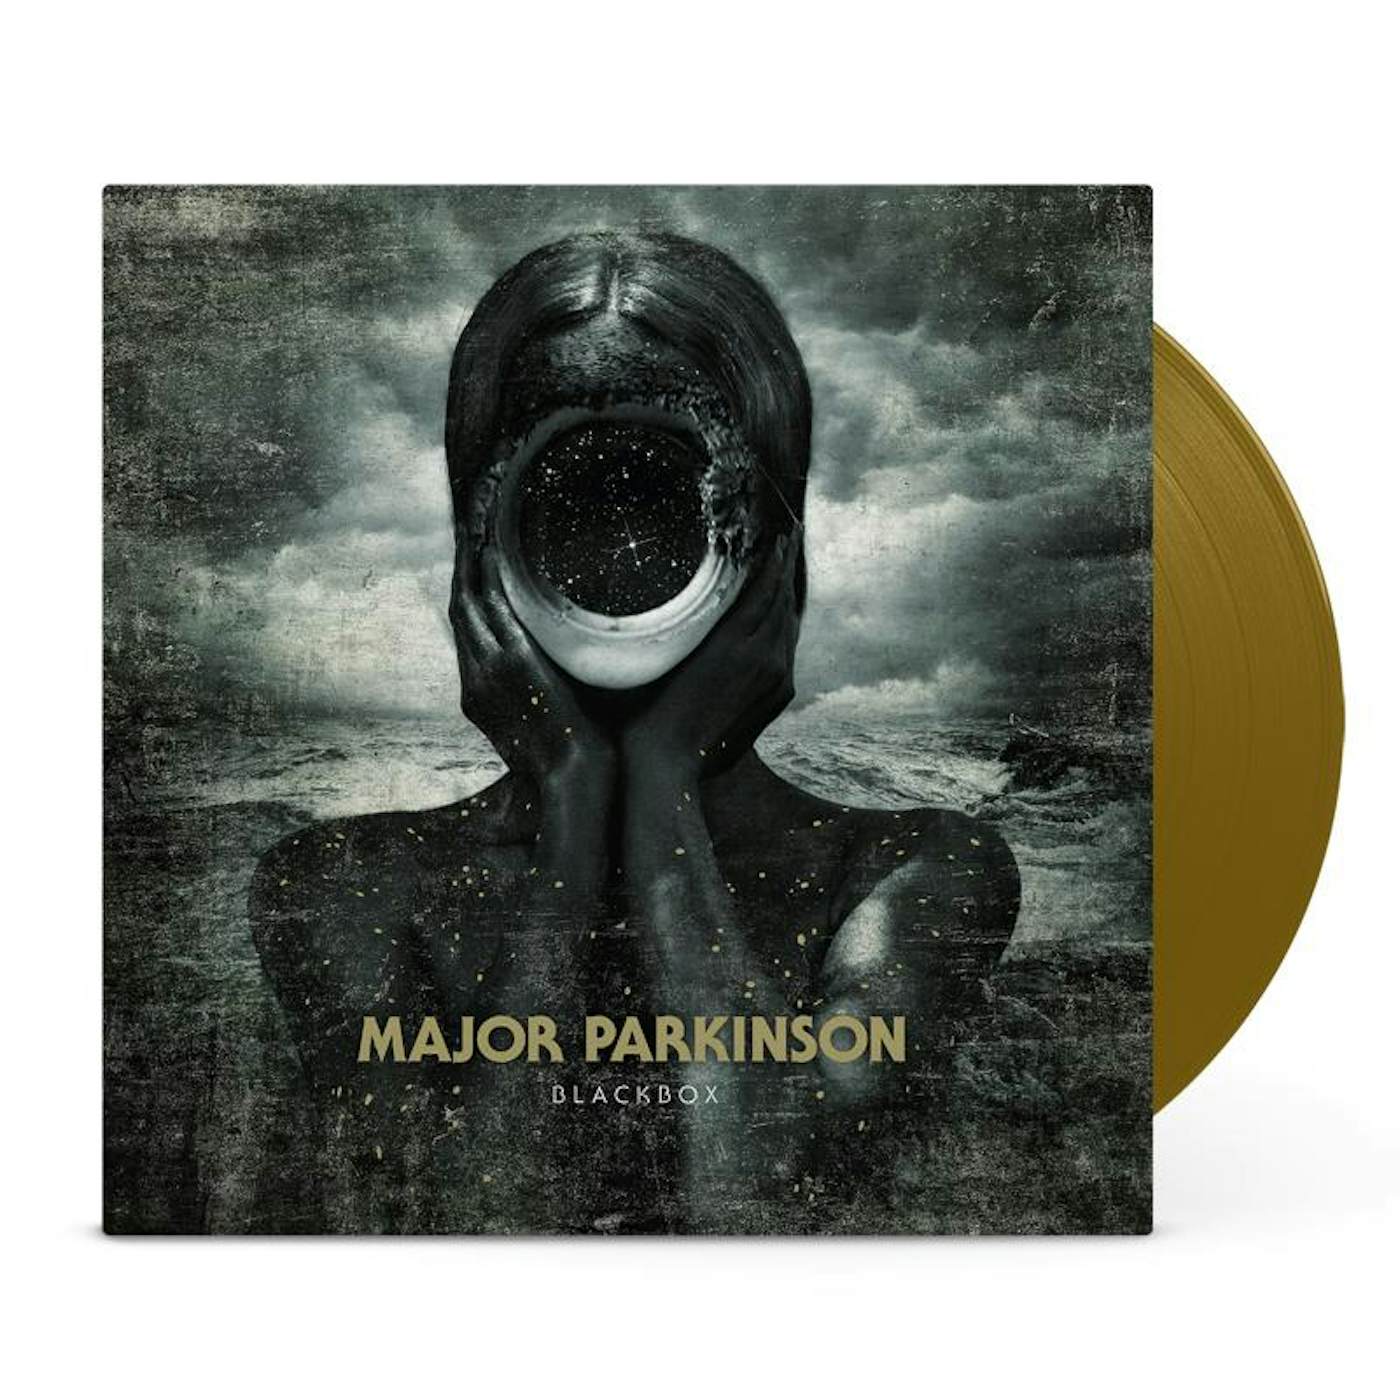 Major Parkinson "Blackbox" Limited Edition 12"